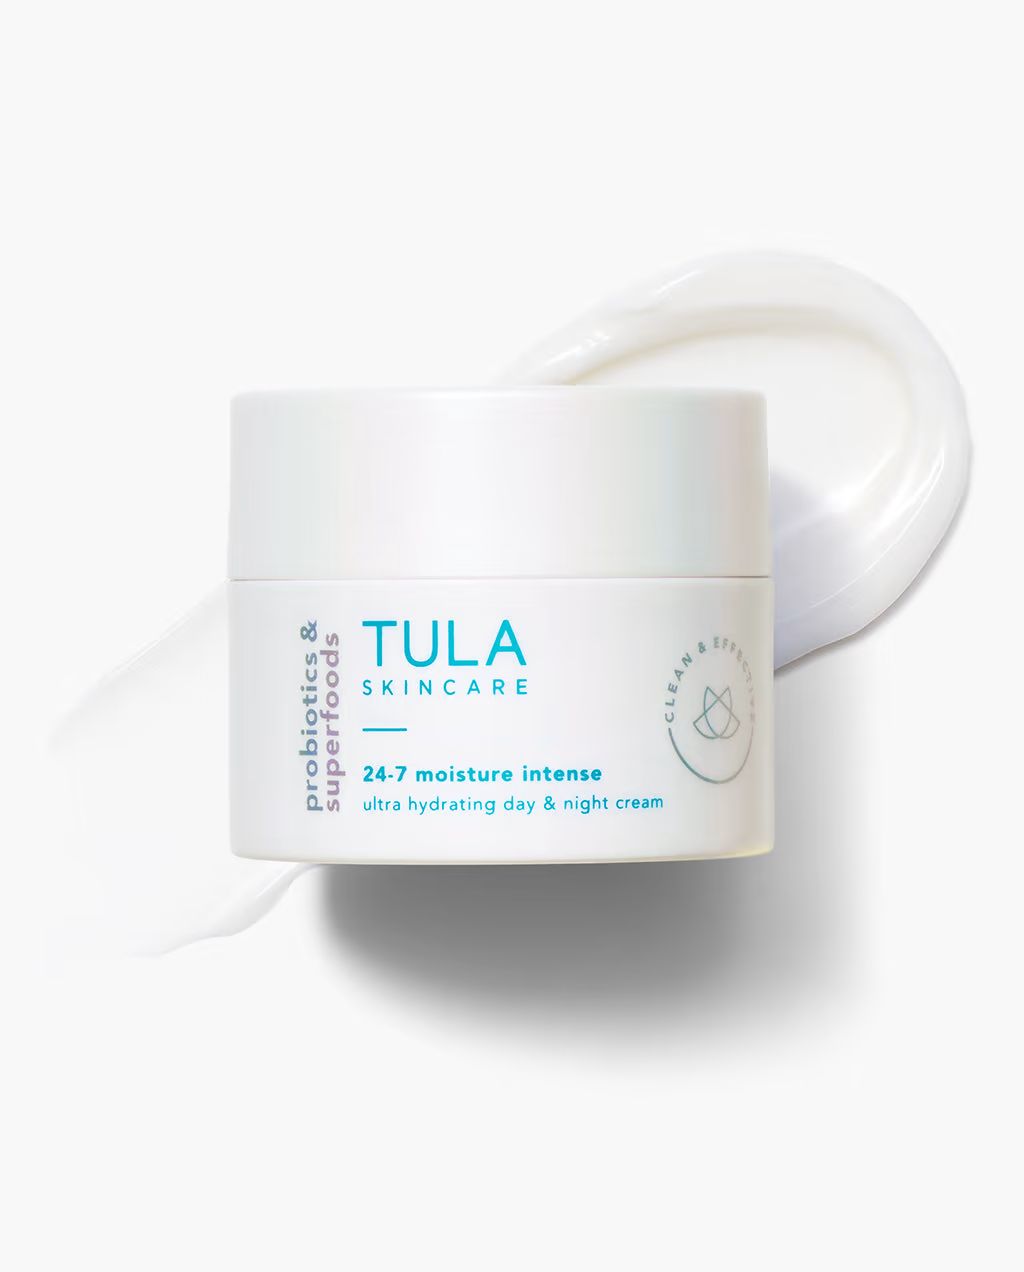 ultra hydrating day & night cream | Tula Skincare